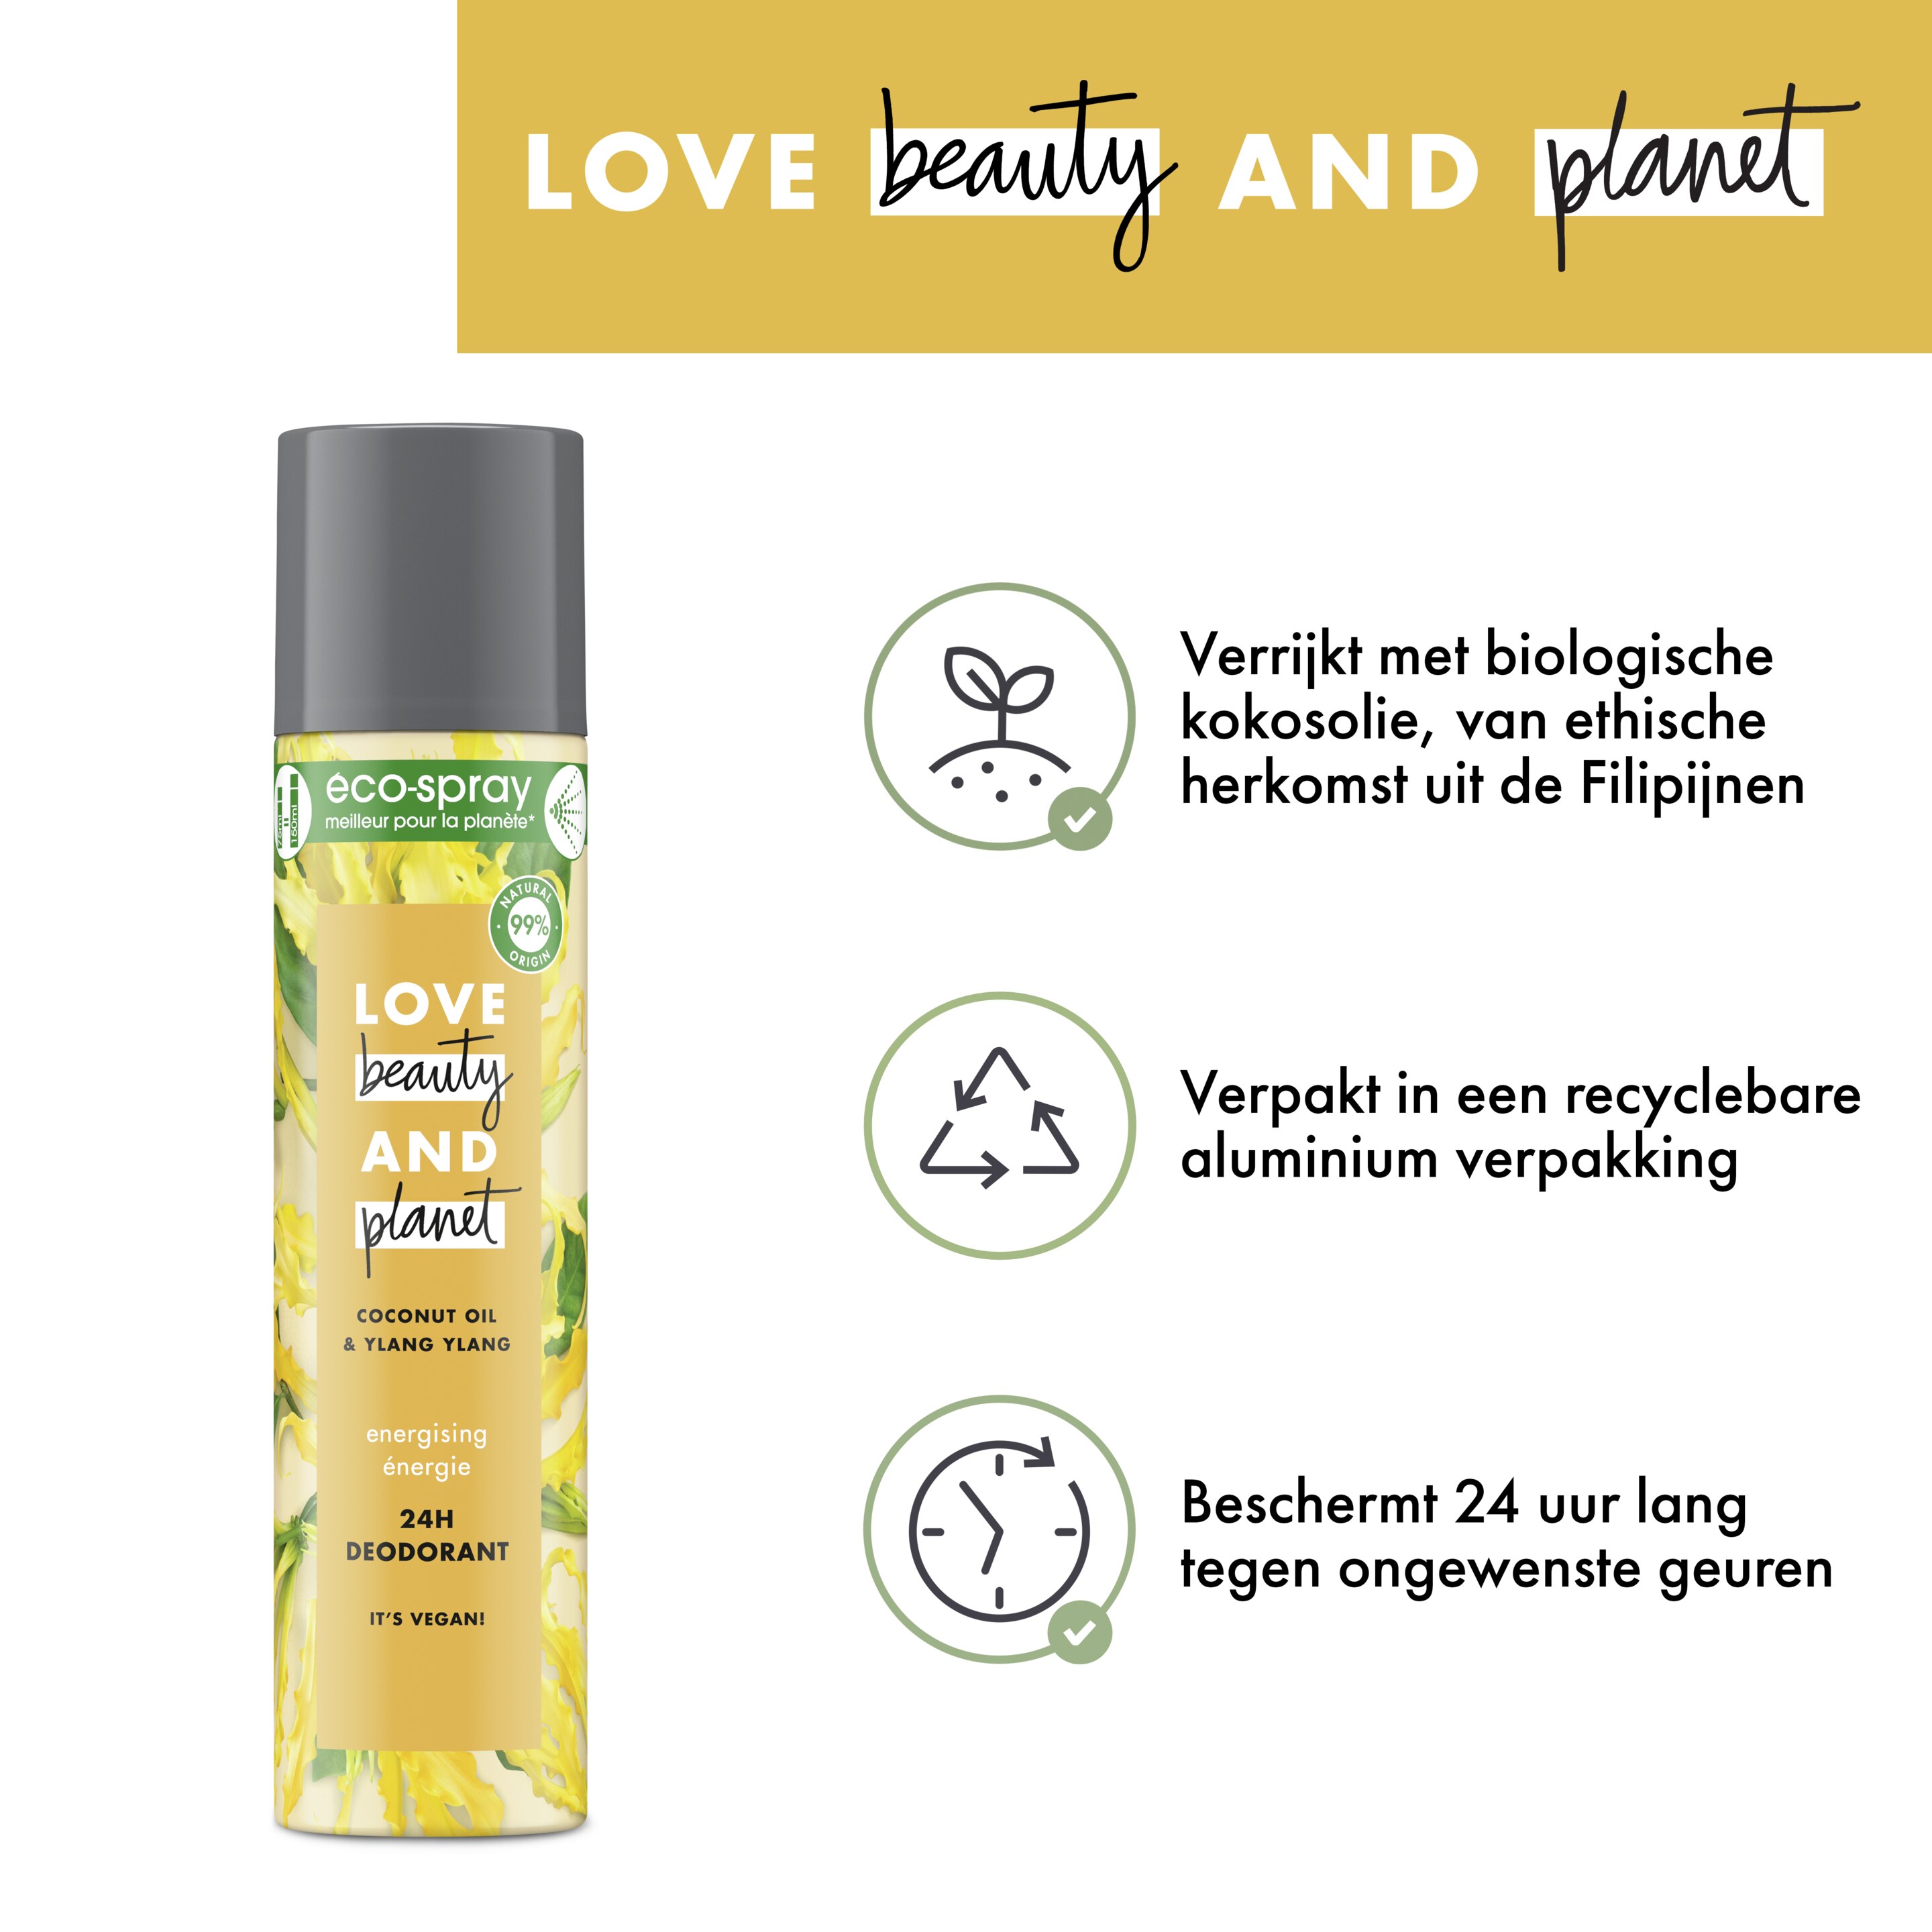 Coconut Oil & Ylang Ylang Energizing Eco-spray Deodorant